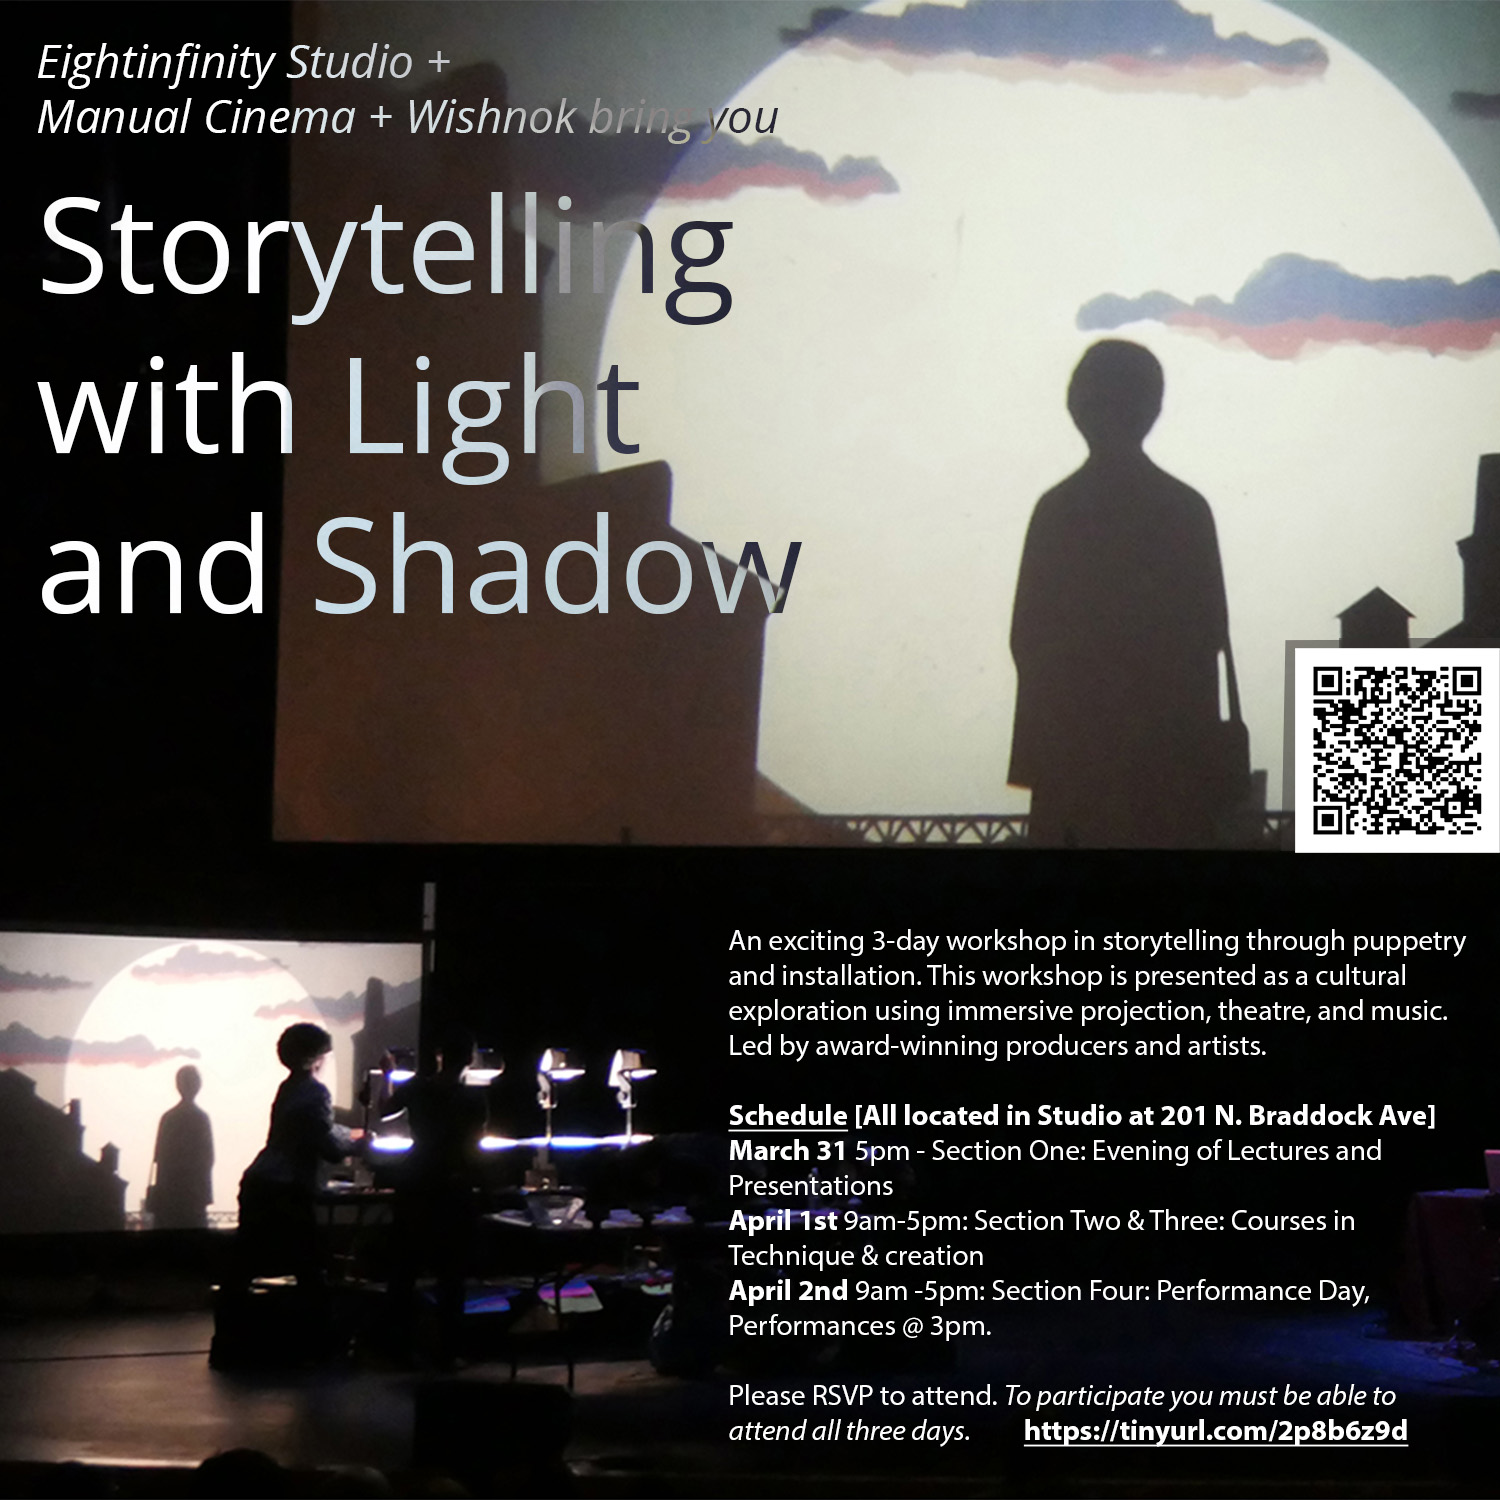 Thumbnail: Eightinfinity Studio + Manual Cinema + Wishnok “Storytelling with Light and Shadow”